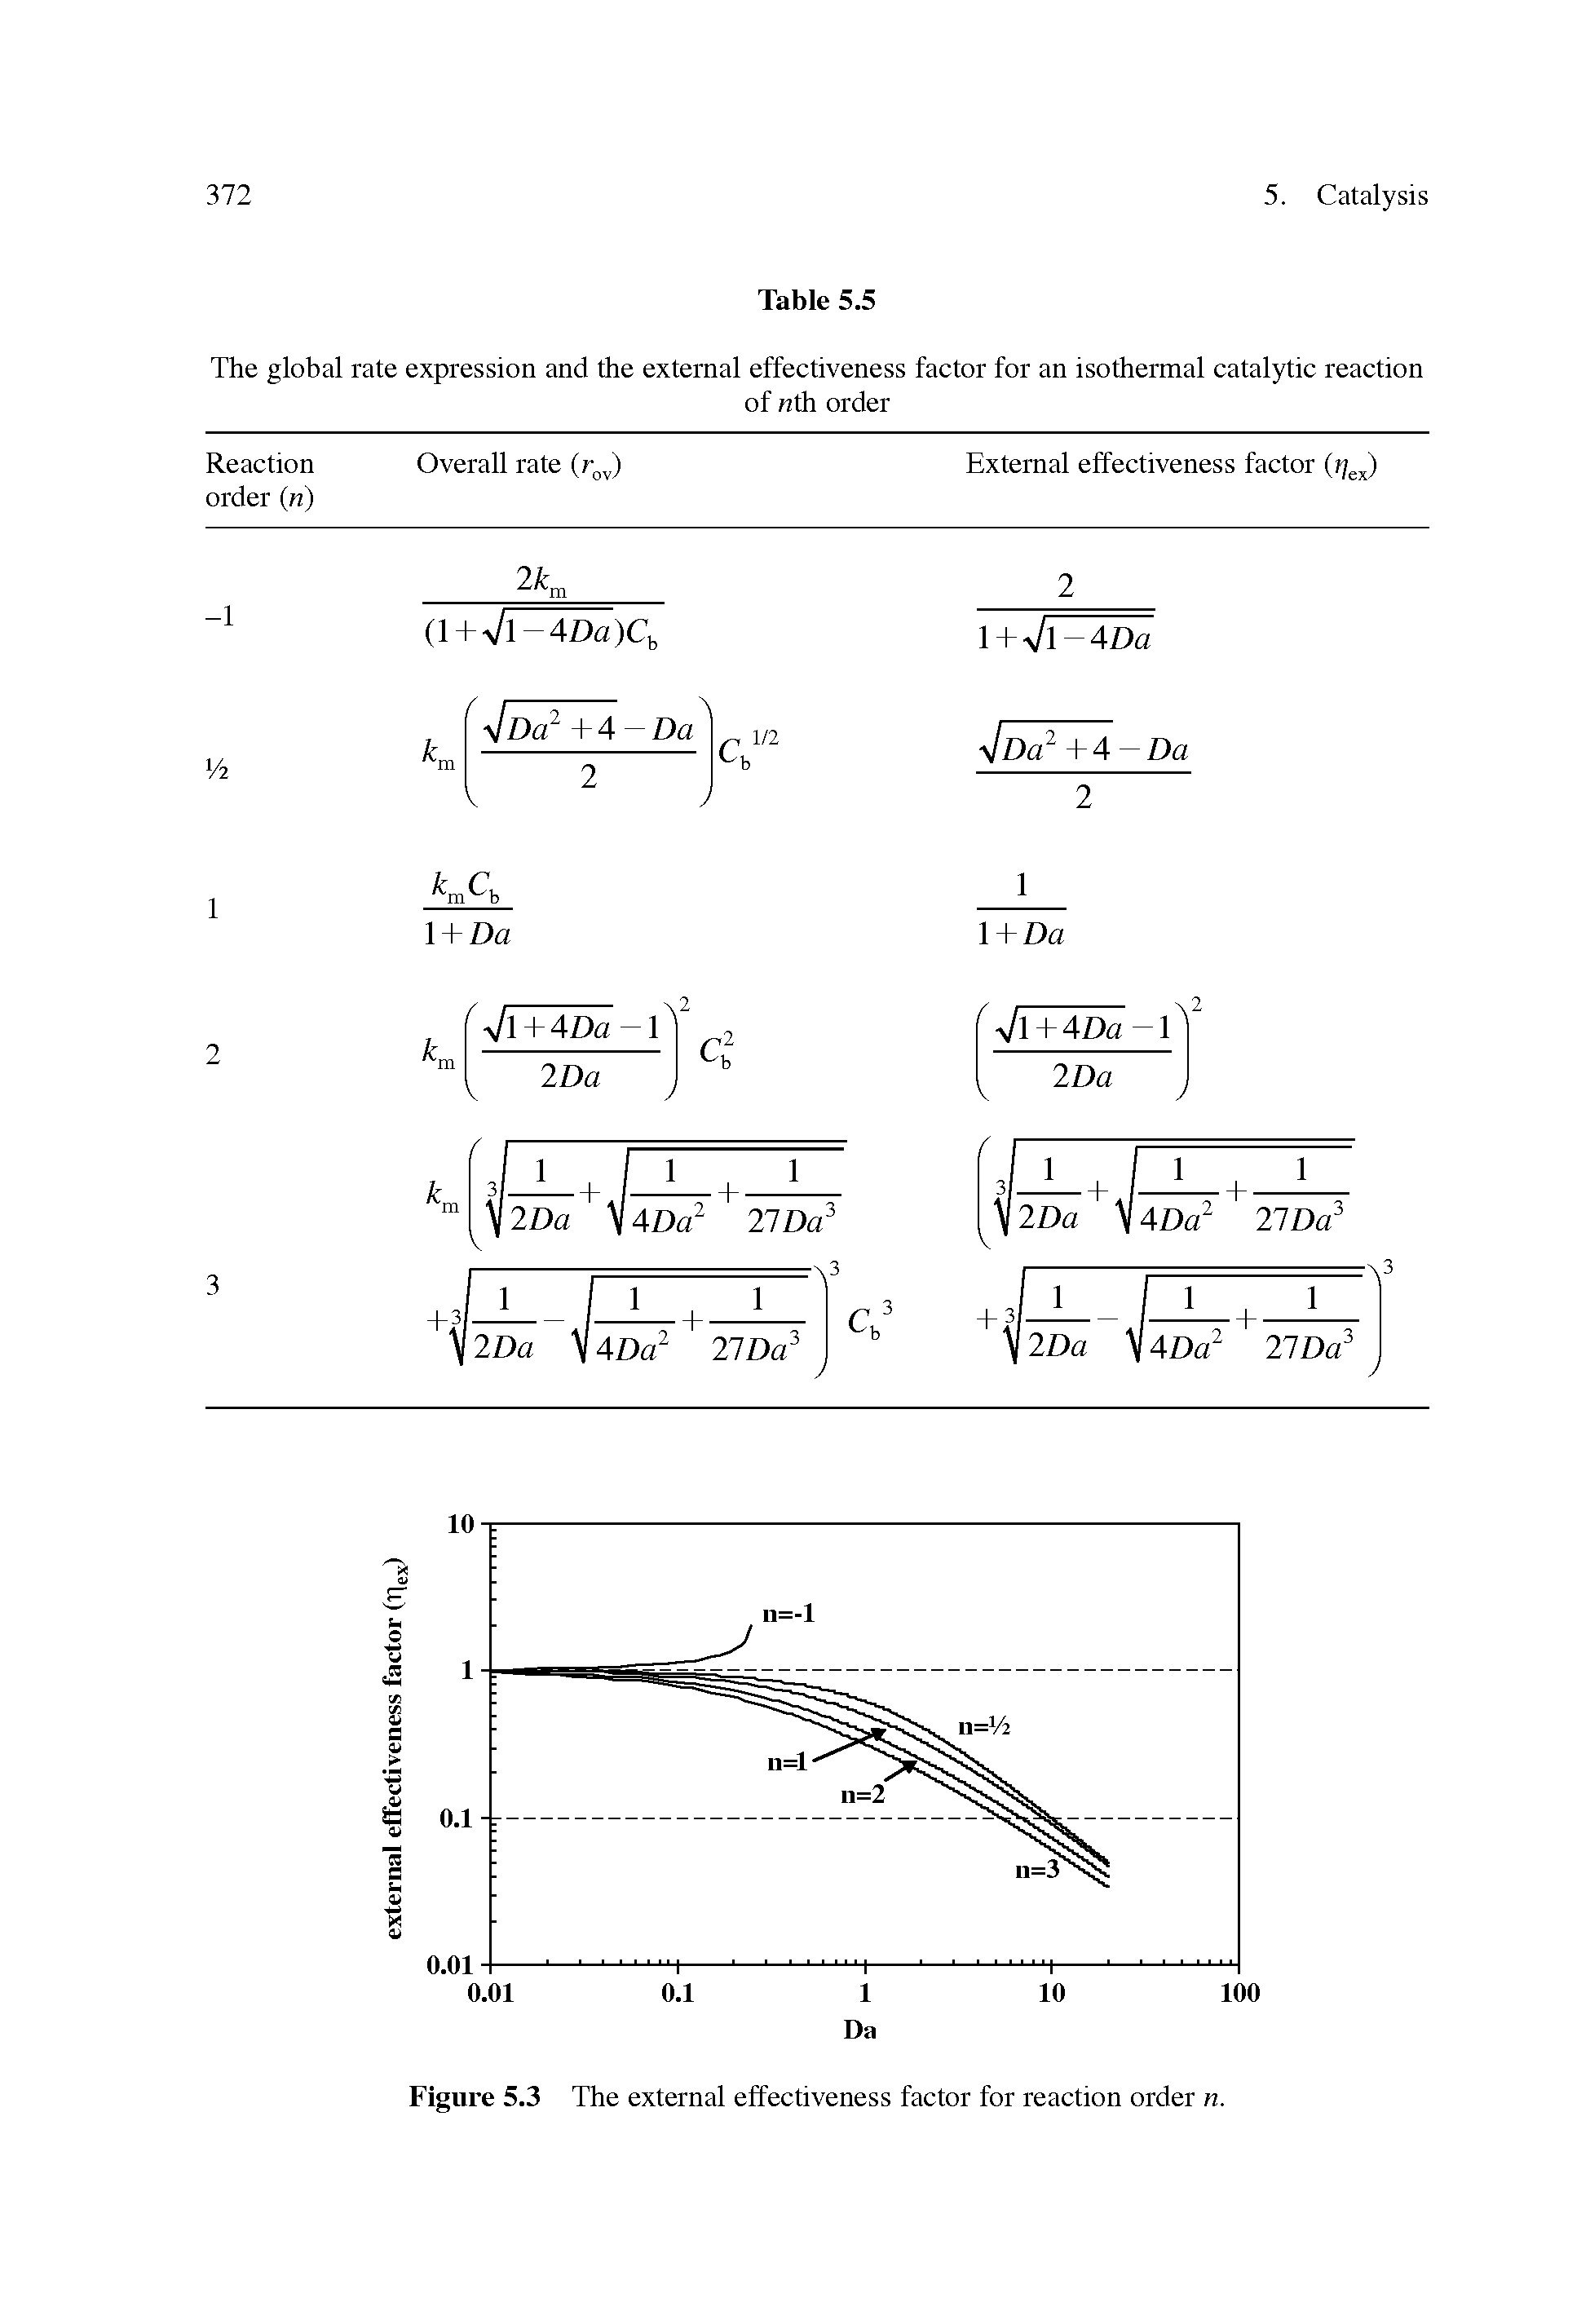 Figure 5.3 The external effectiveness factor for reaction order n.